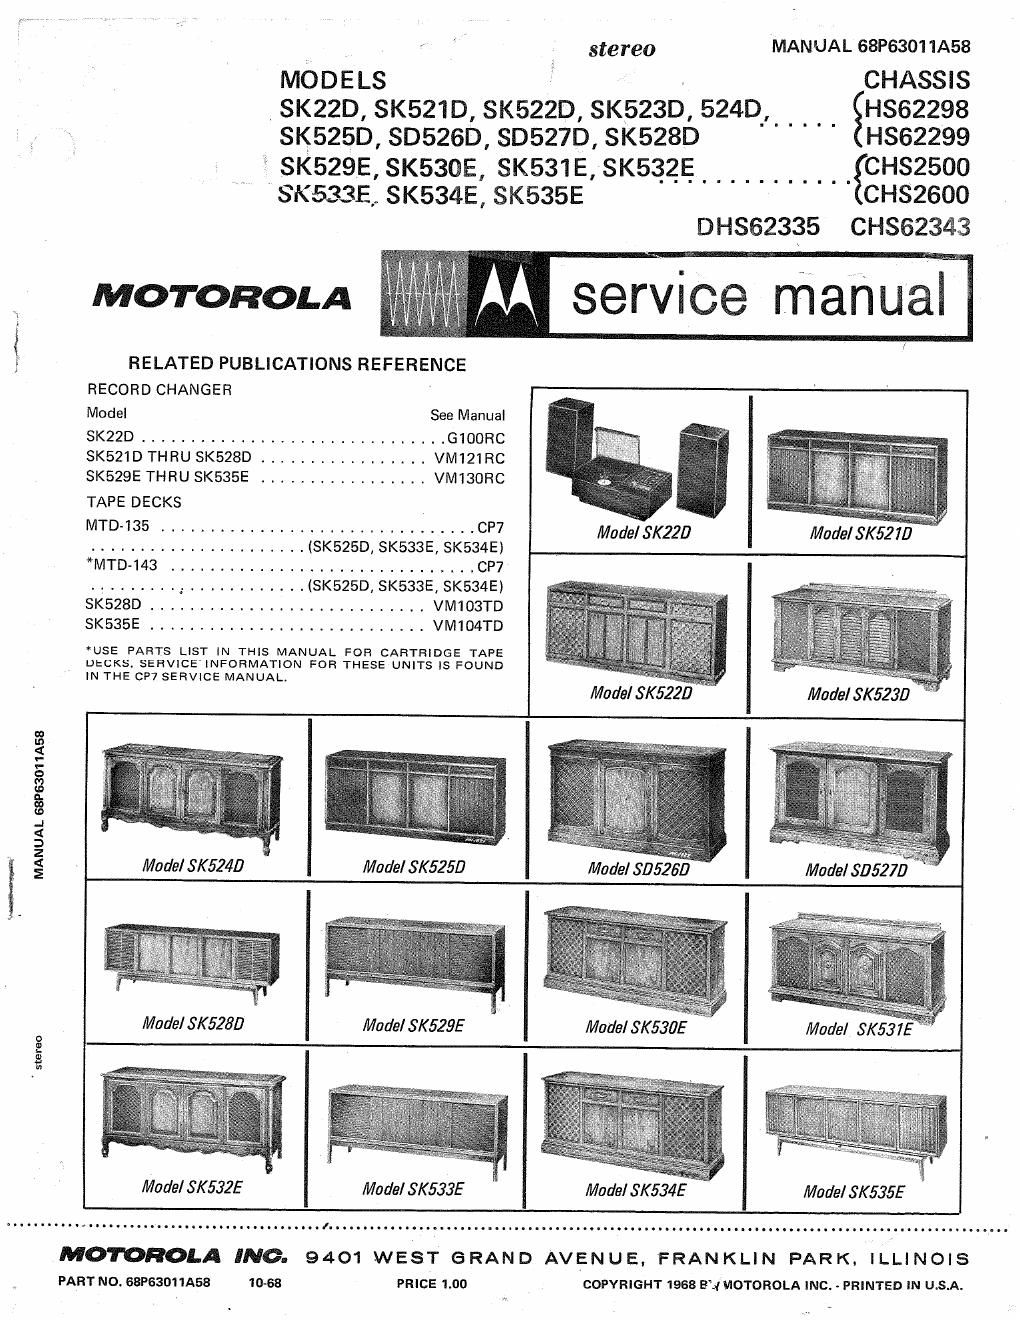 motorola sk 532 e service manual